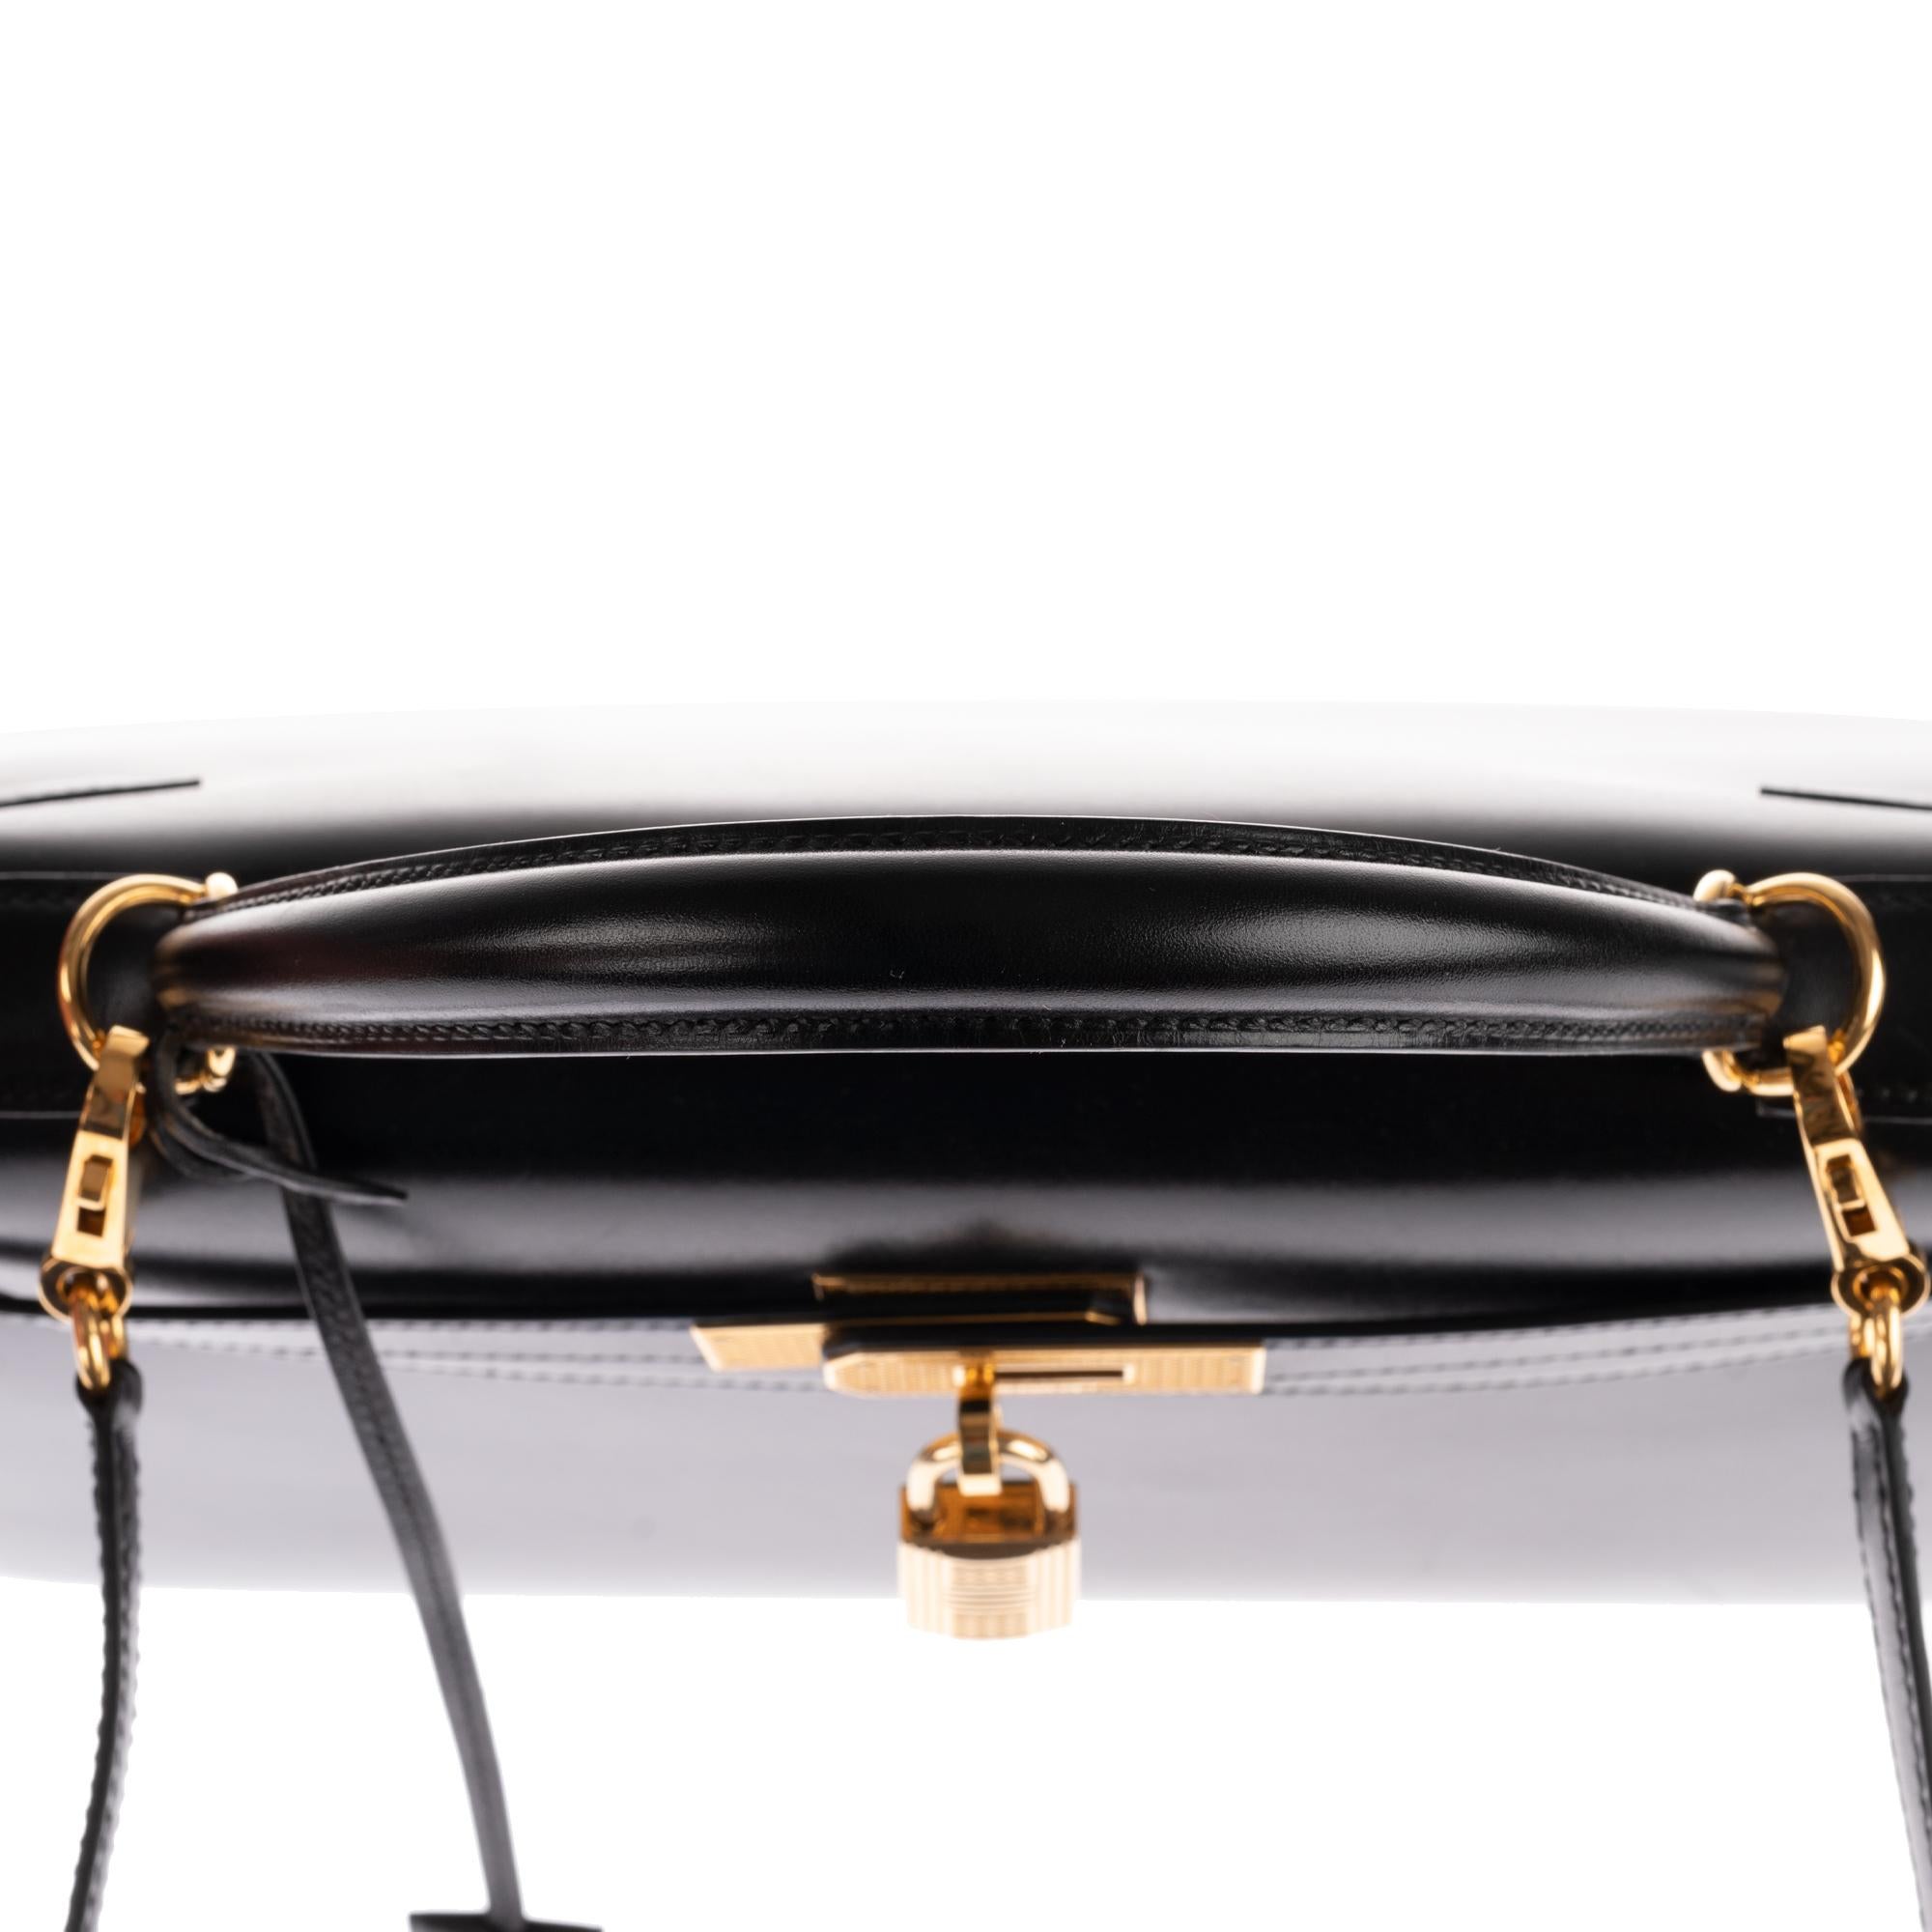 Very limited Handbag Hermès Kelly sellier 32 with strap in black calfskin, GHW! 3